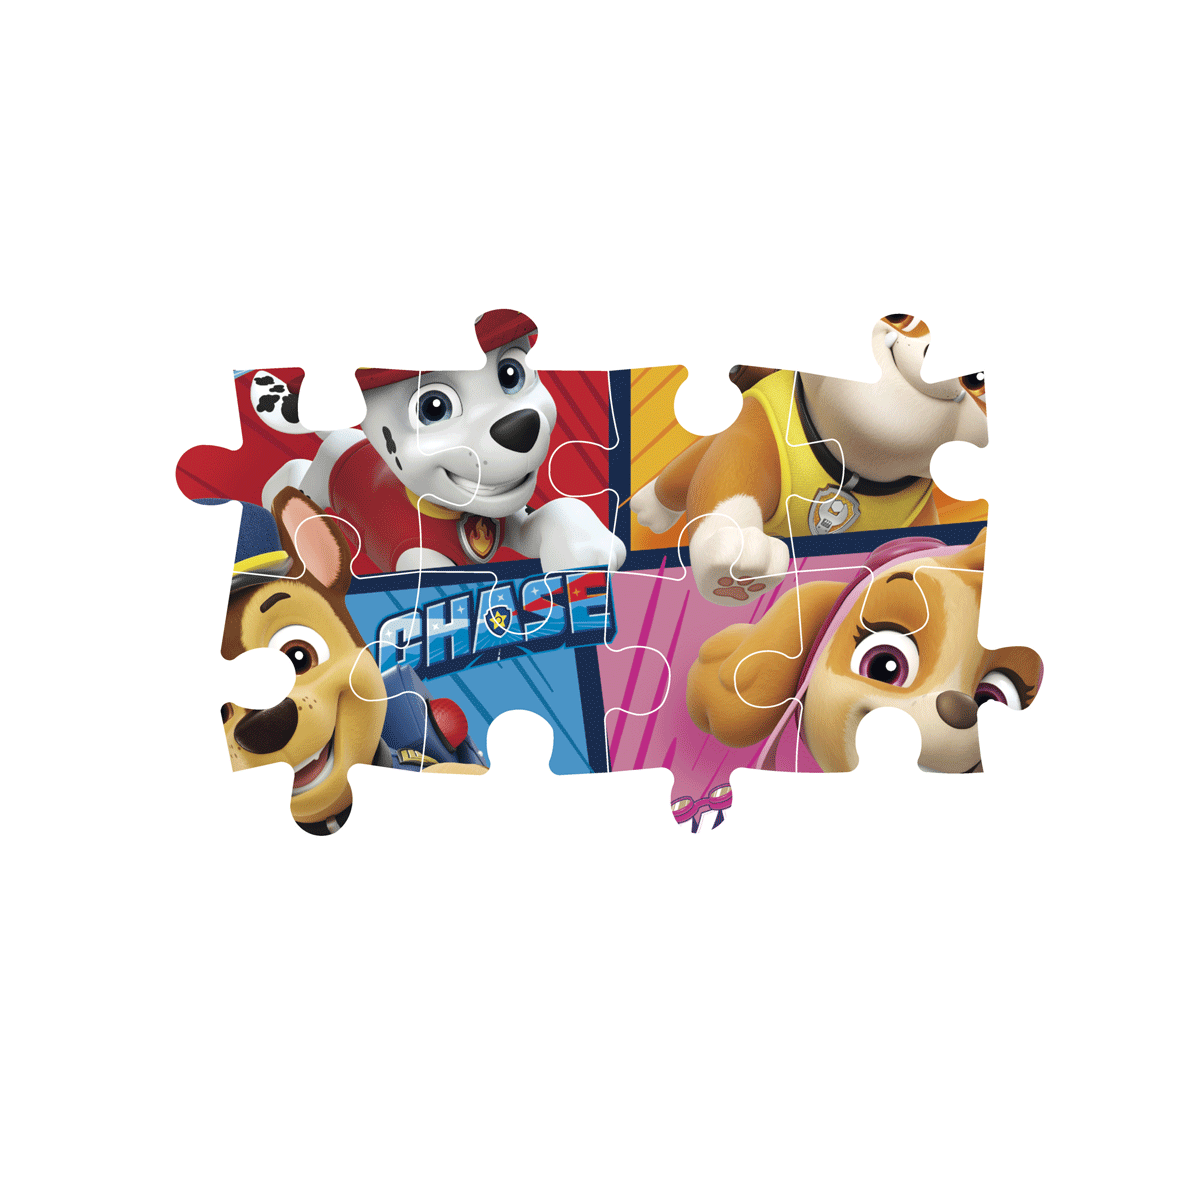 Clementoni supercolor puzzle paw patrol - 24 maxi pezzi, puzzle bambini 3 anni - CLEMENTONI